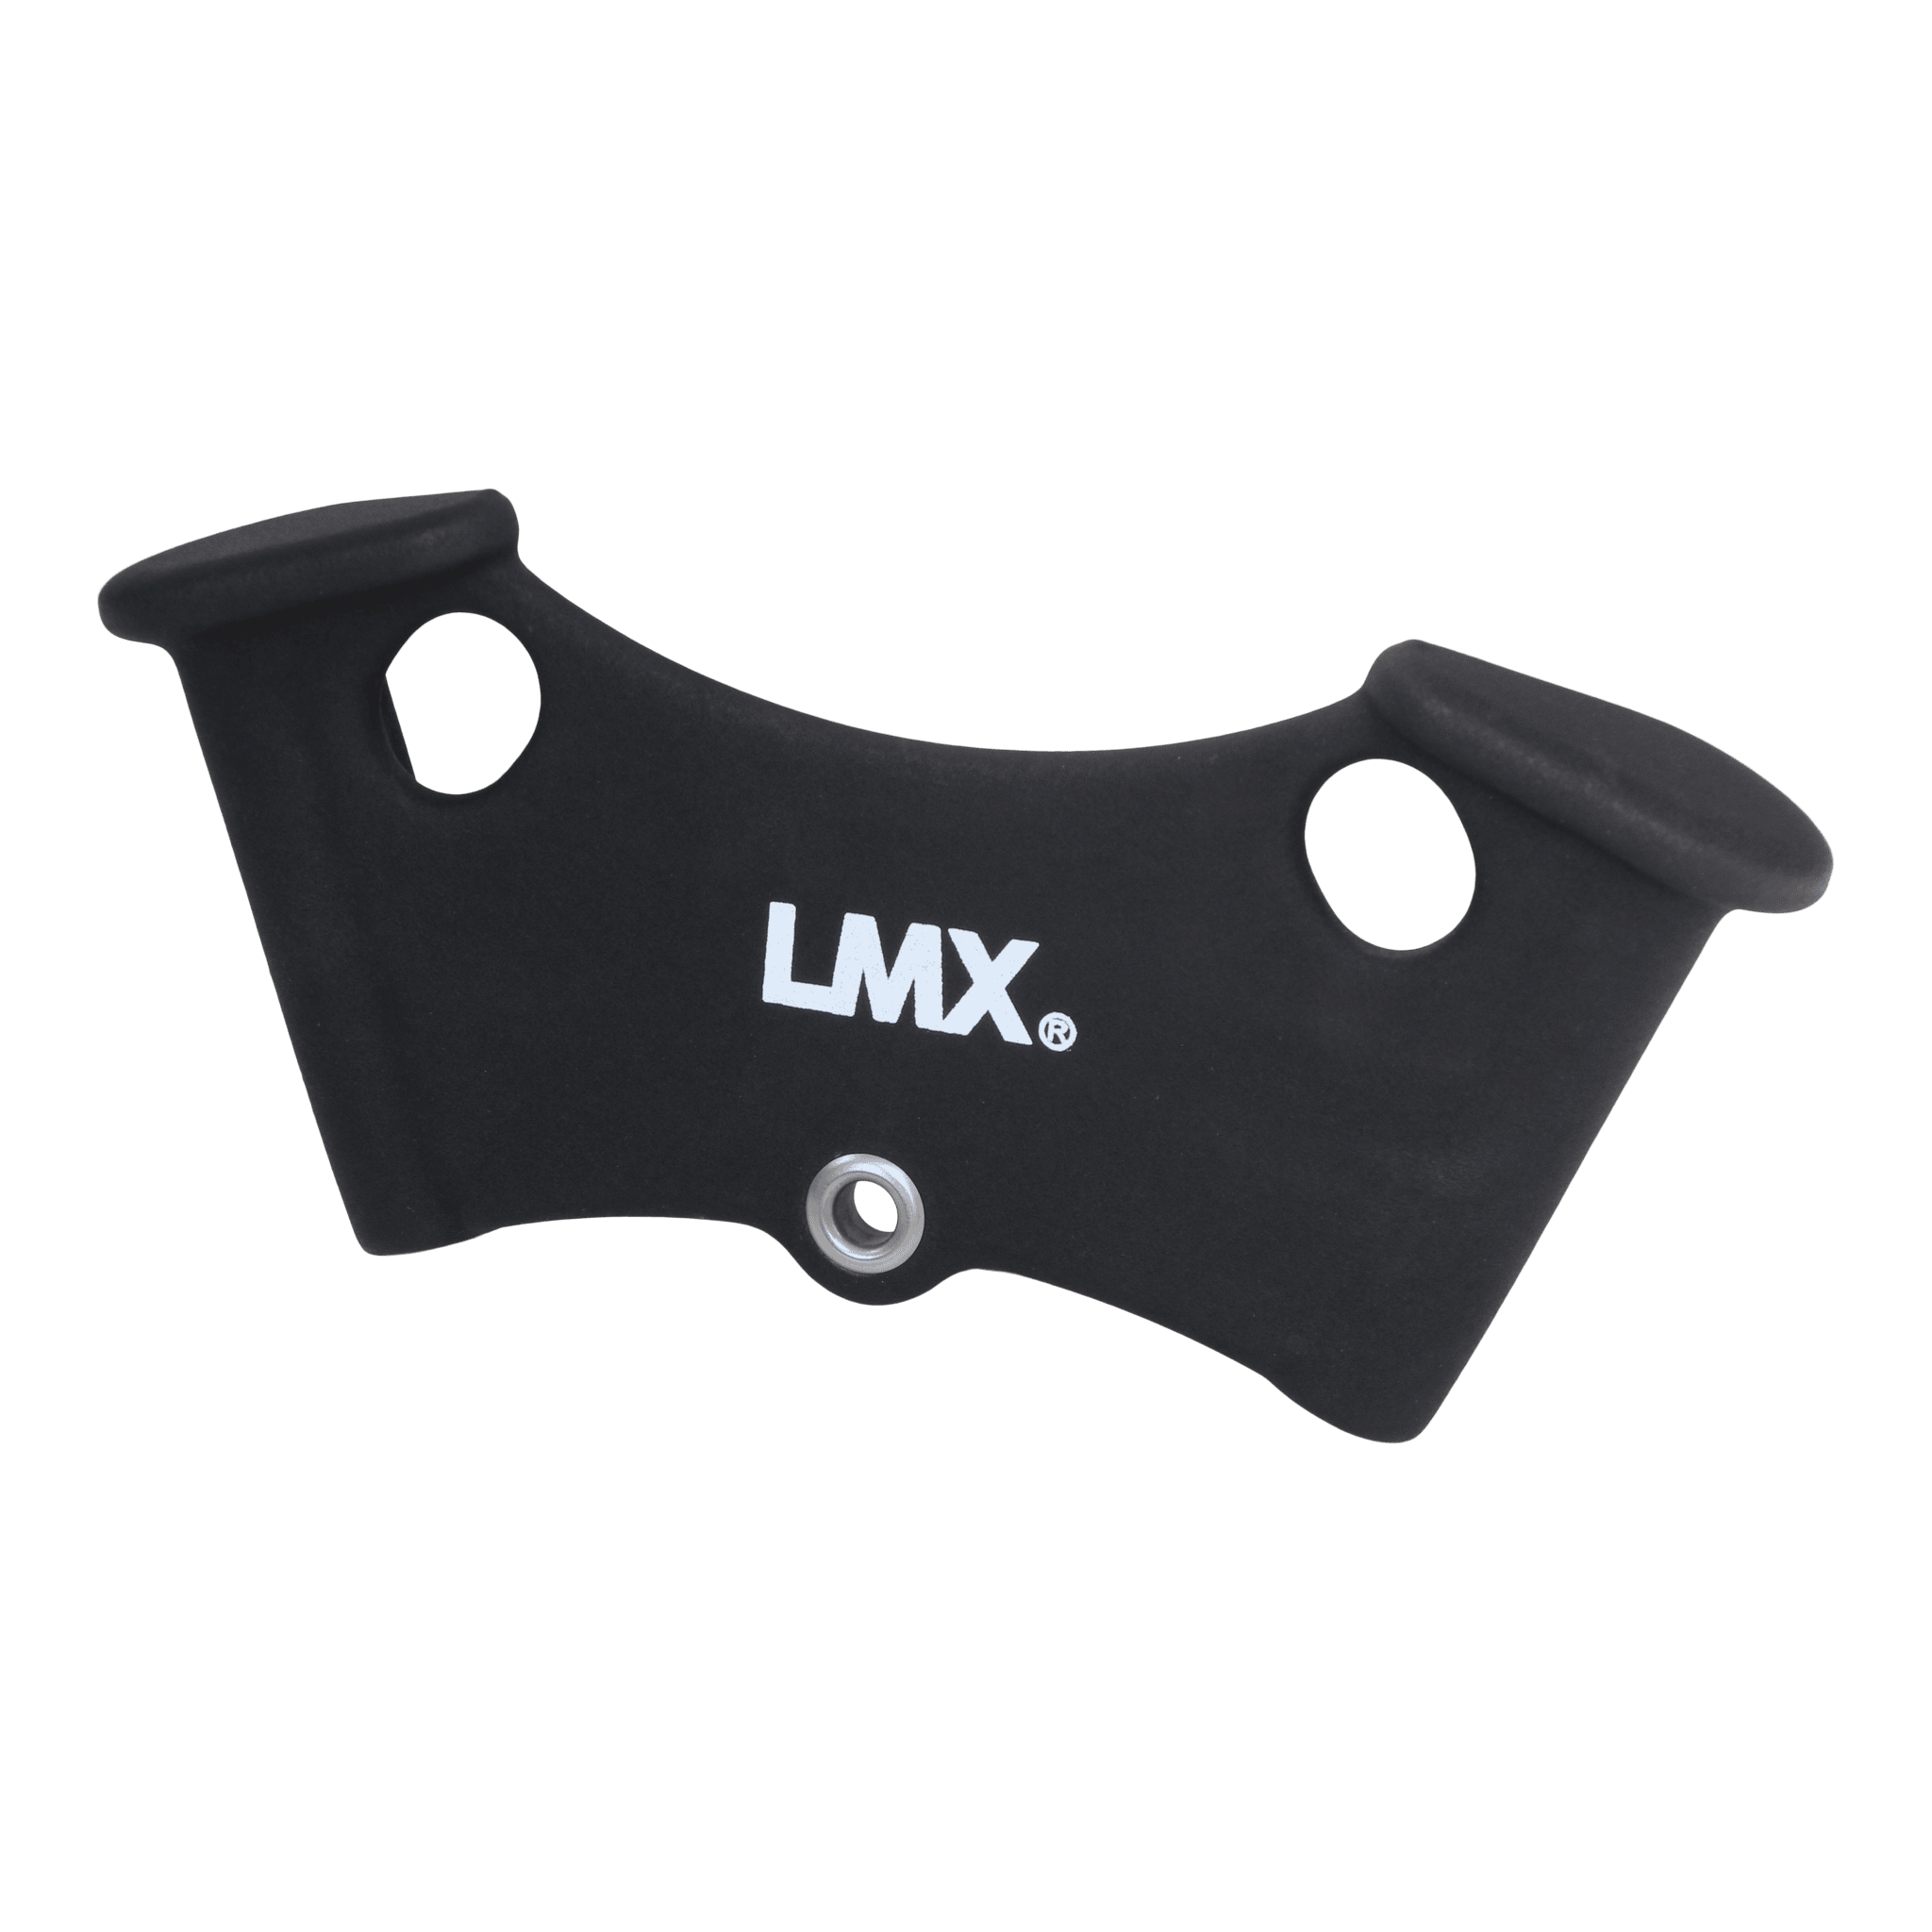 Lifemaxx LMX2305 Ergo Foam grip bicep bar